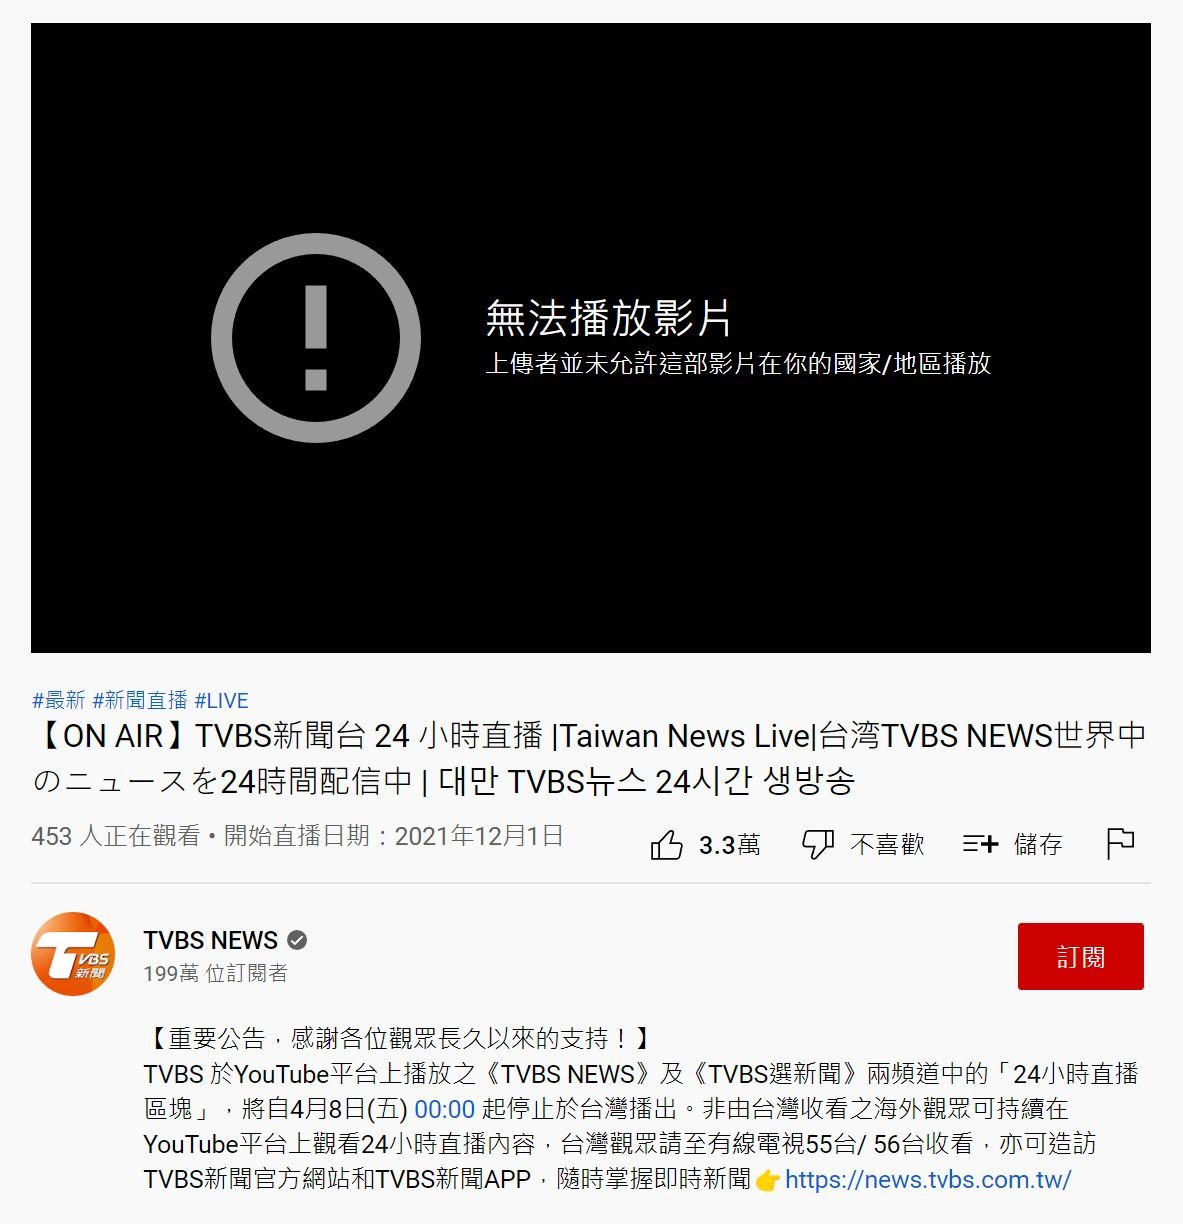 2022-04-11-00_16_55-【ON-AIR】TVBS 新聞台-24-小時直播-_Taiwan-News-Live_台湾 TVBS-NEWS 世界中のニュースを24 時間配信中-_-대만-TVBS뉴.jpg @3C 達人廖阿輝